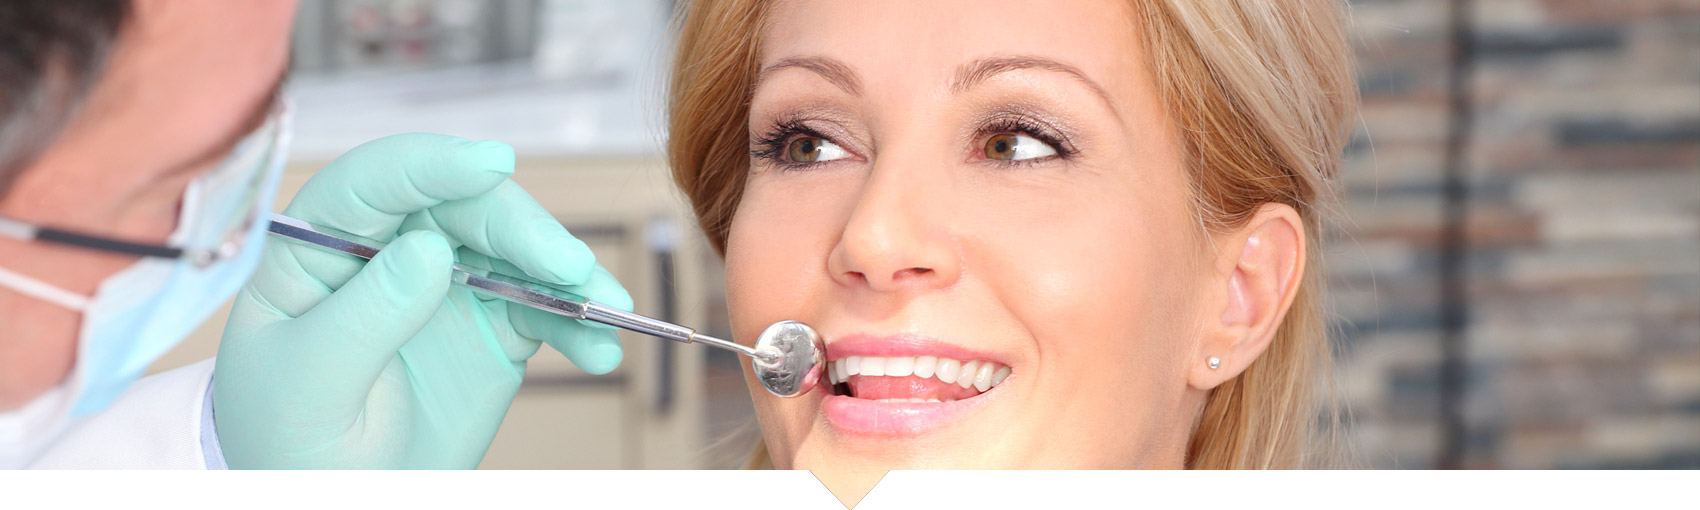 Meet Dr. Patel - Ontario Dental Center